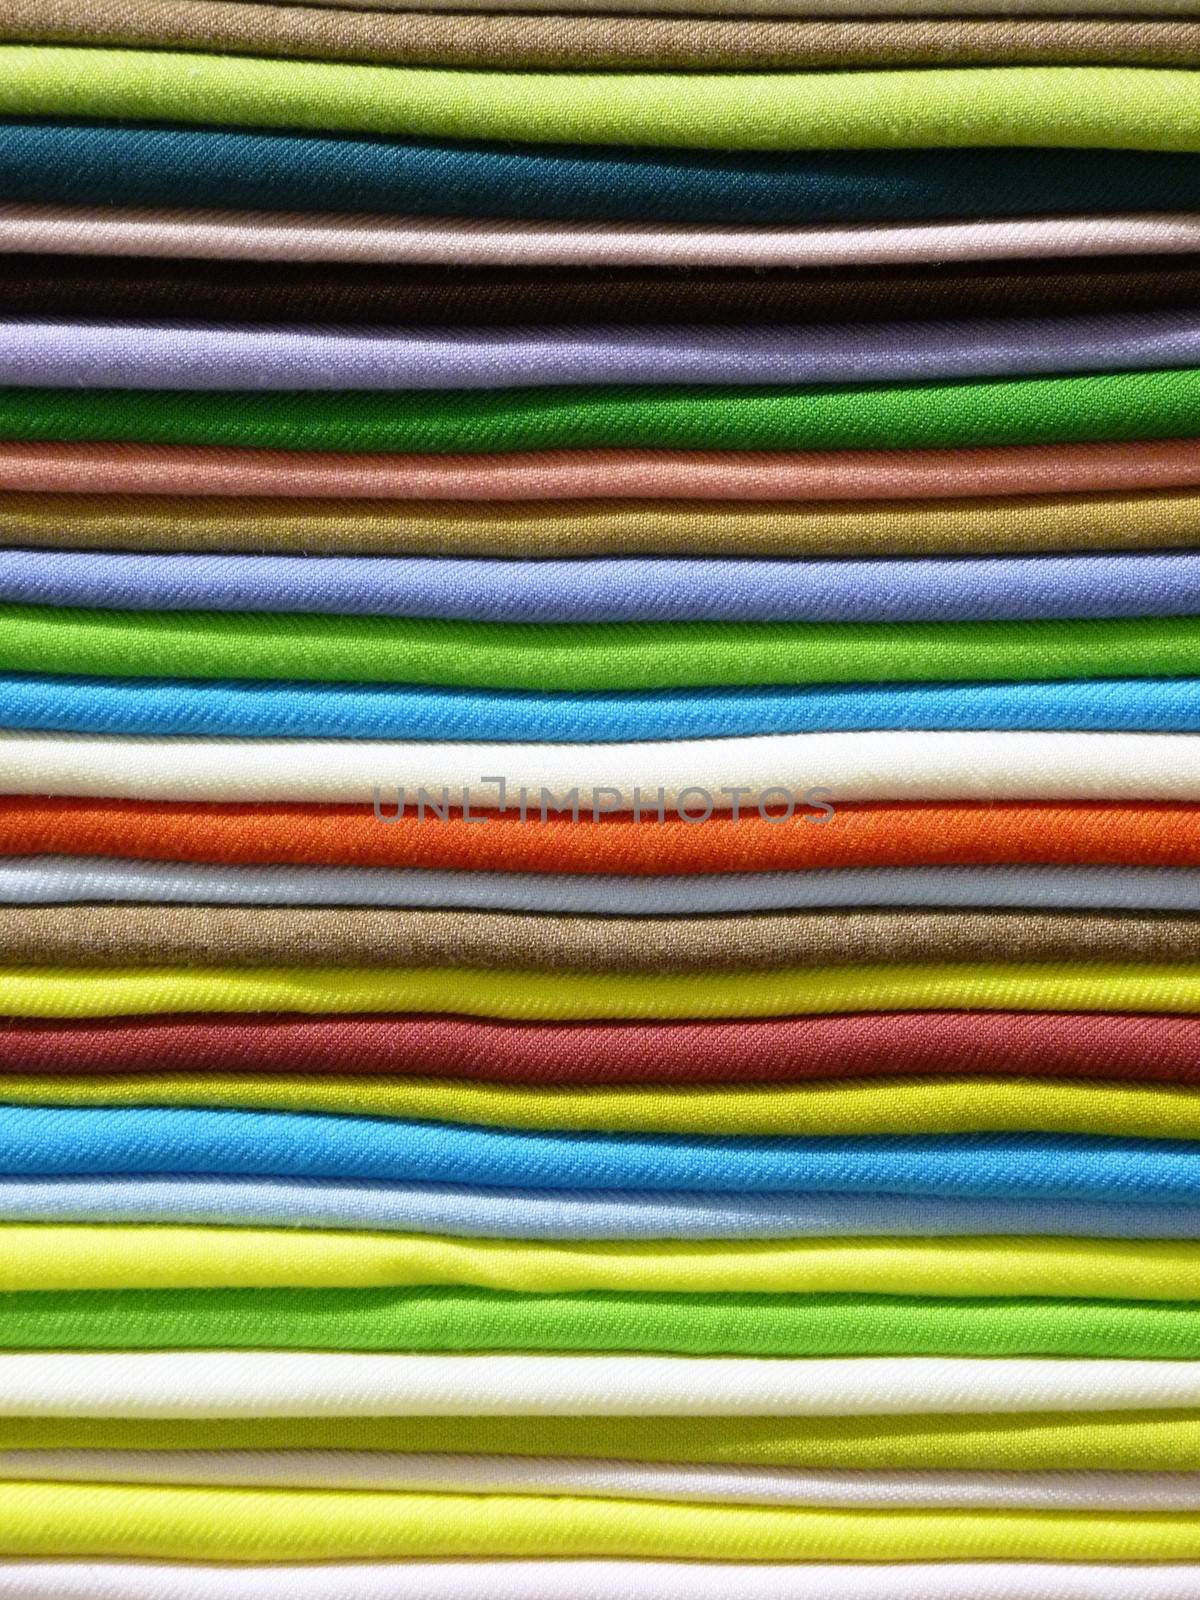 Colored fabrics by ktinte